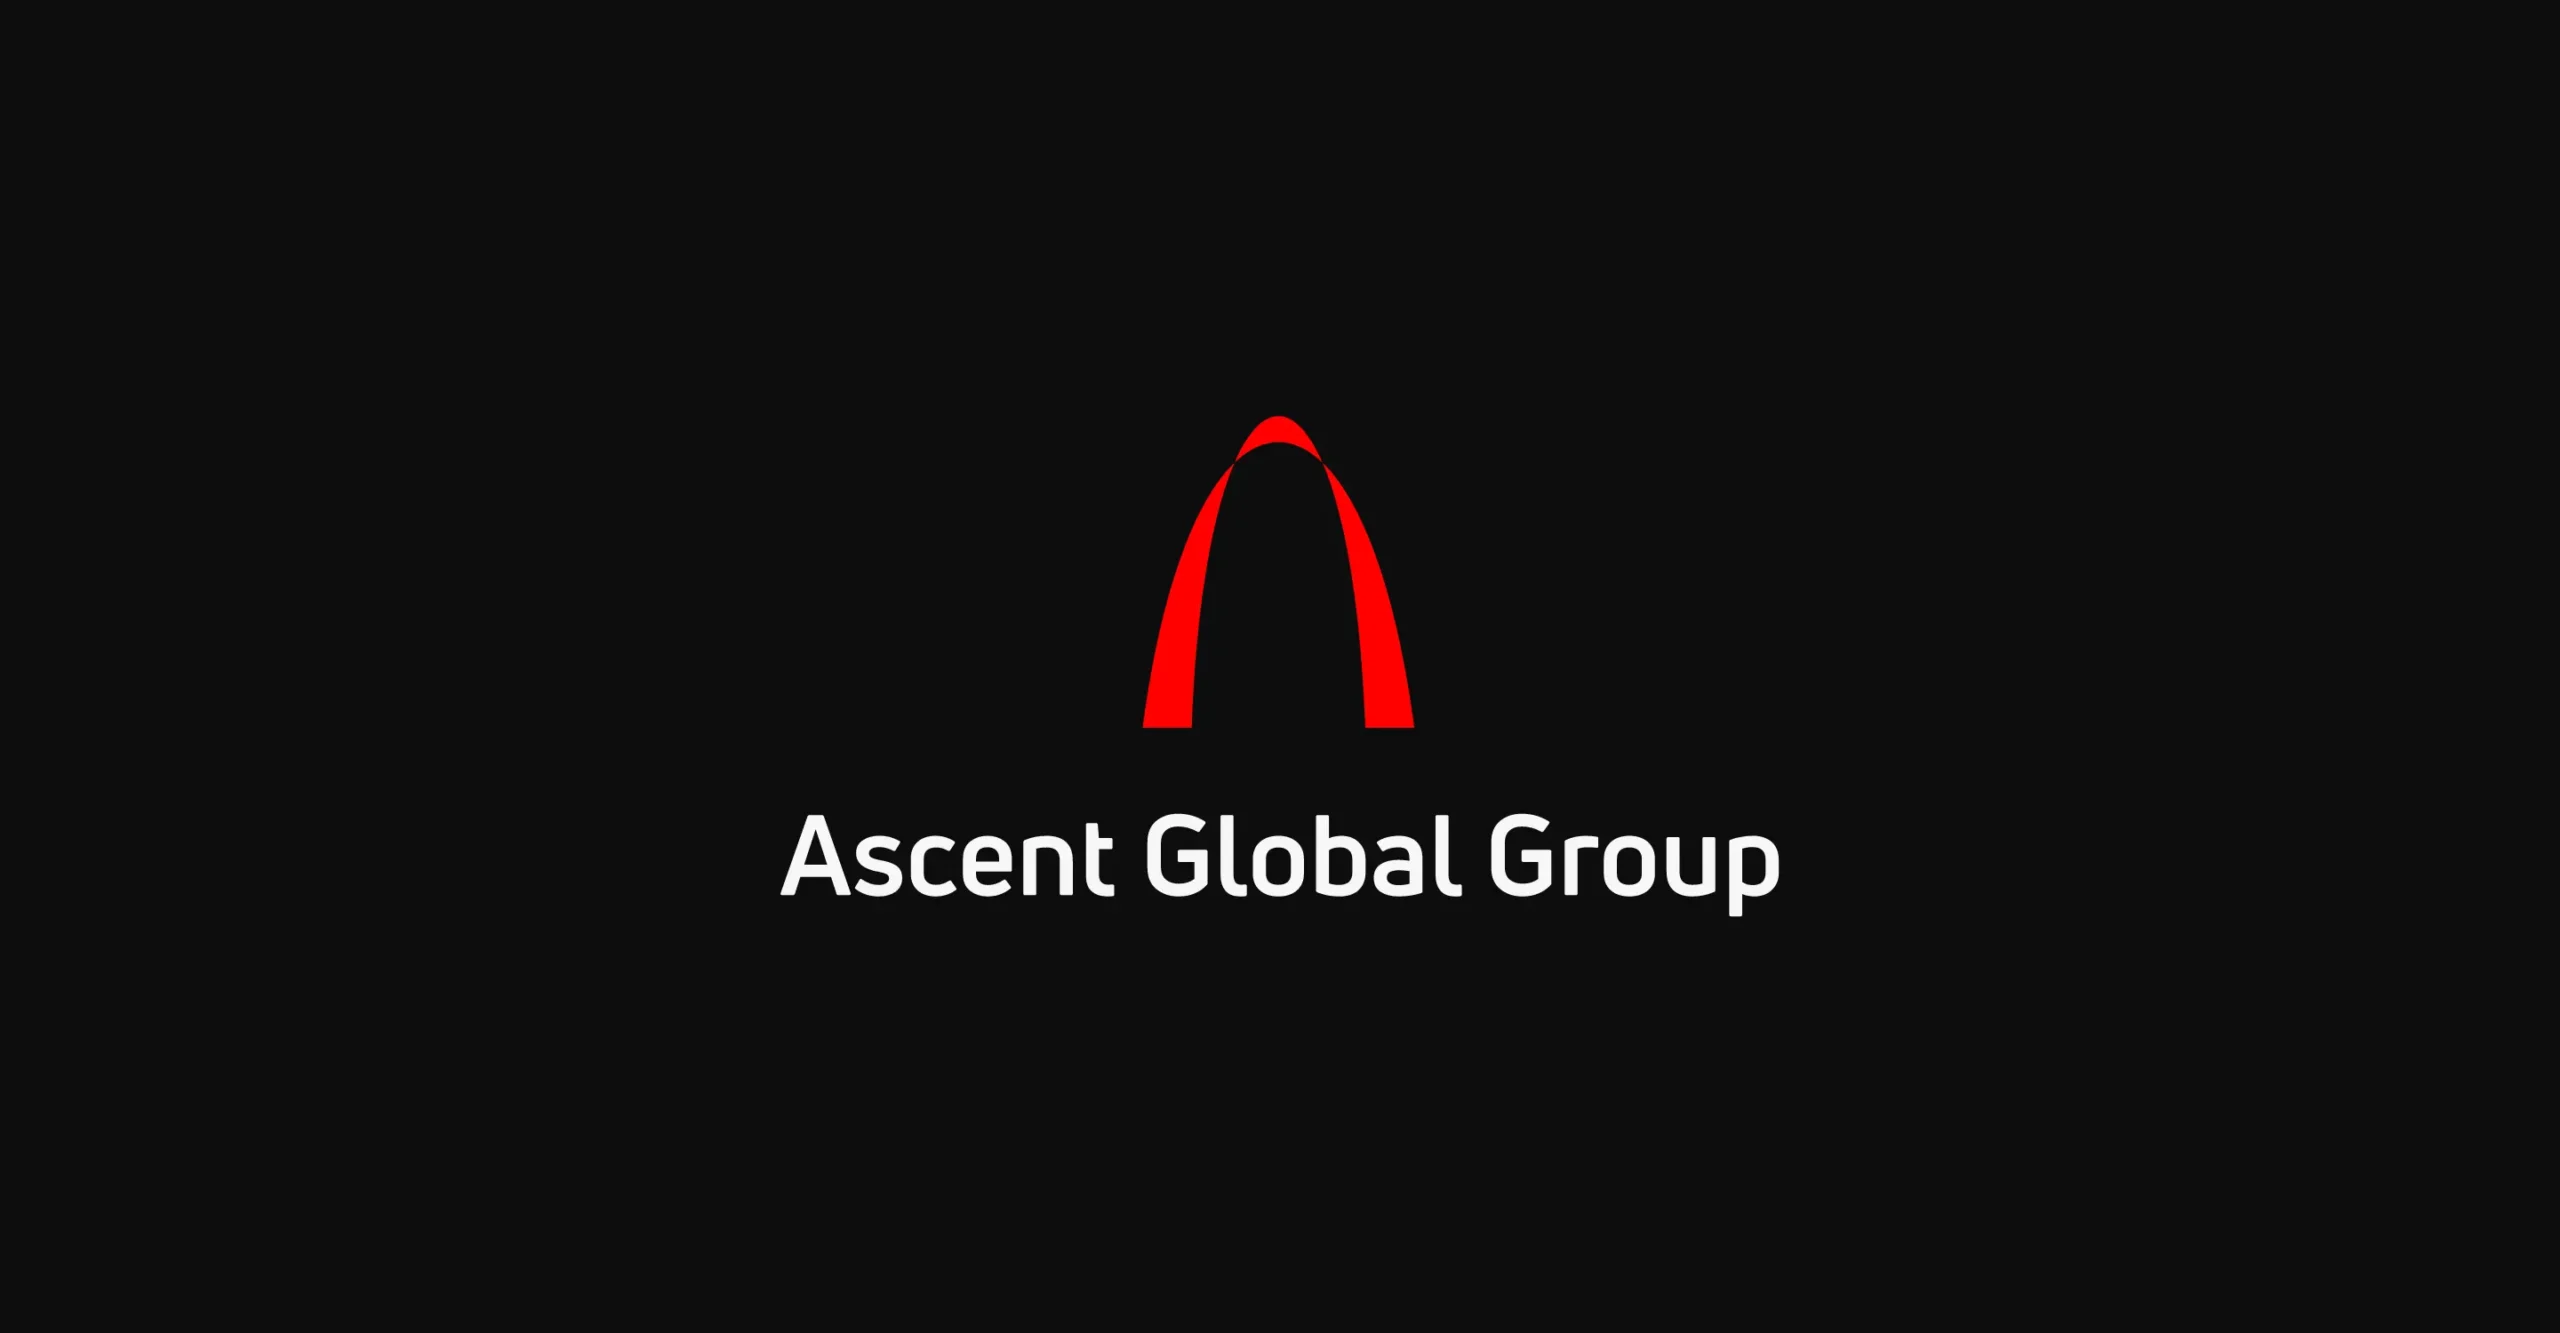 Ascent global group logo design scaled